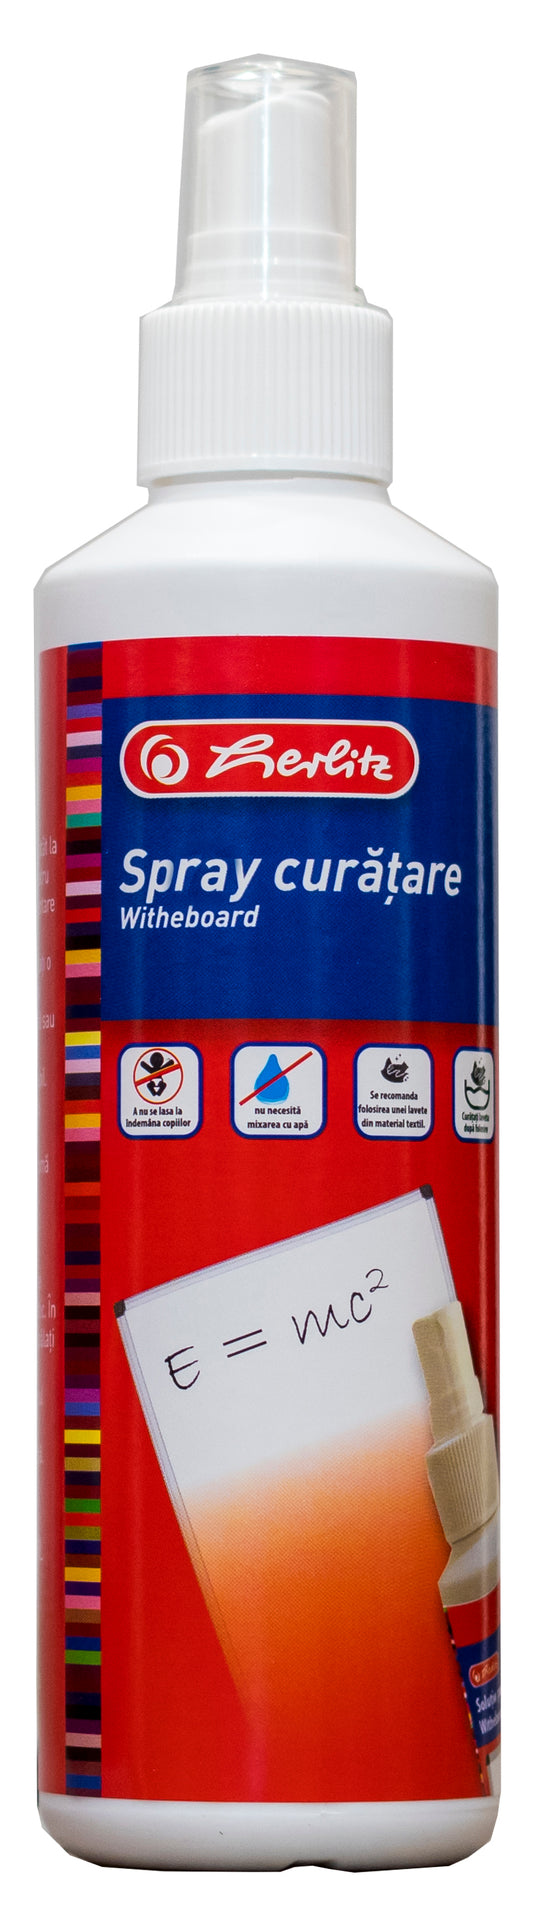 Herlitz 9478690 Spray pentru curatare whiteboard 250 ml, 6423967021064